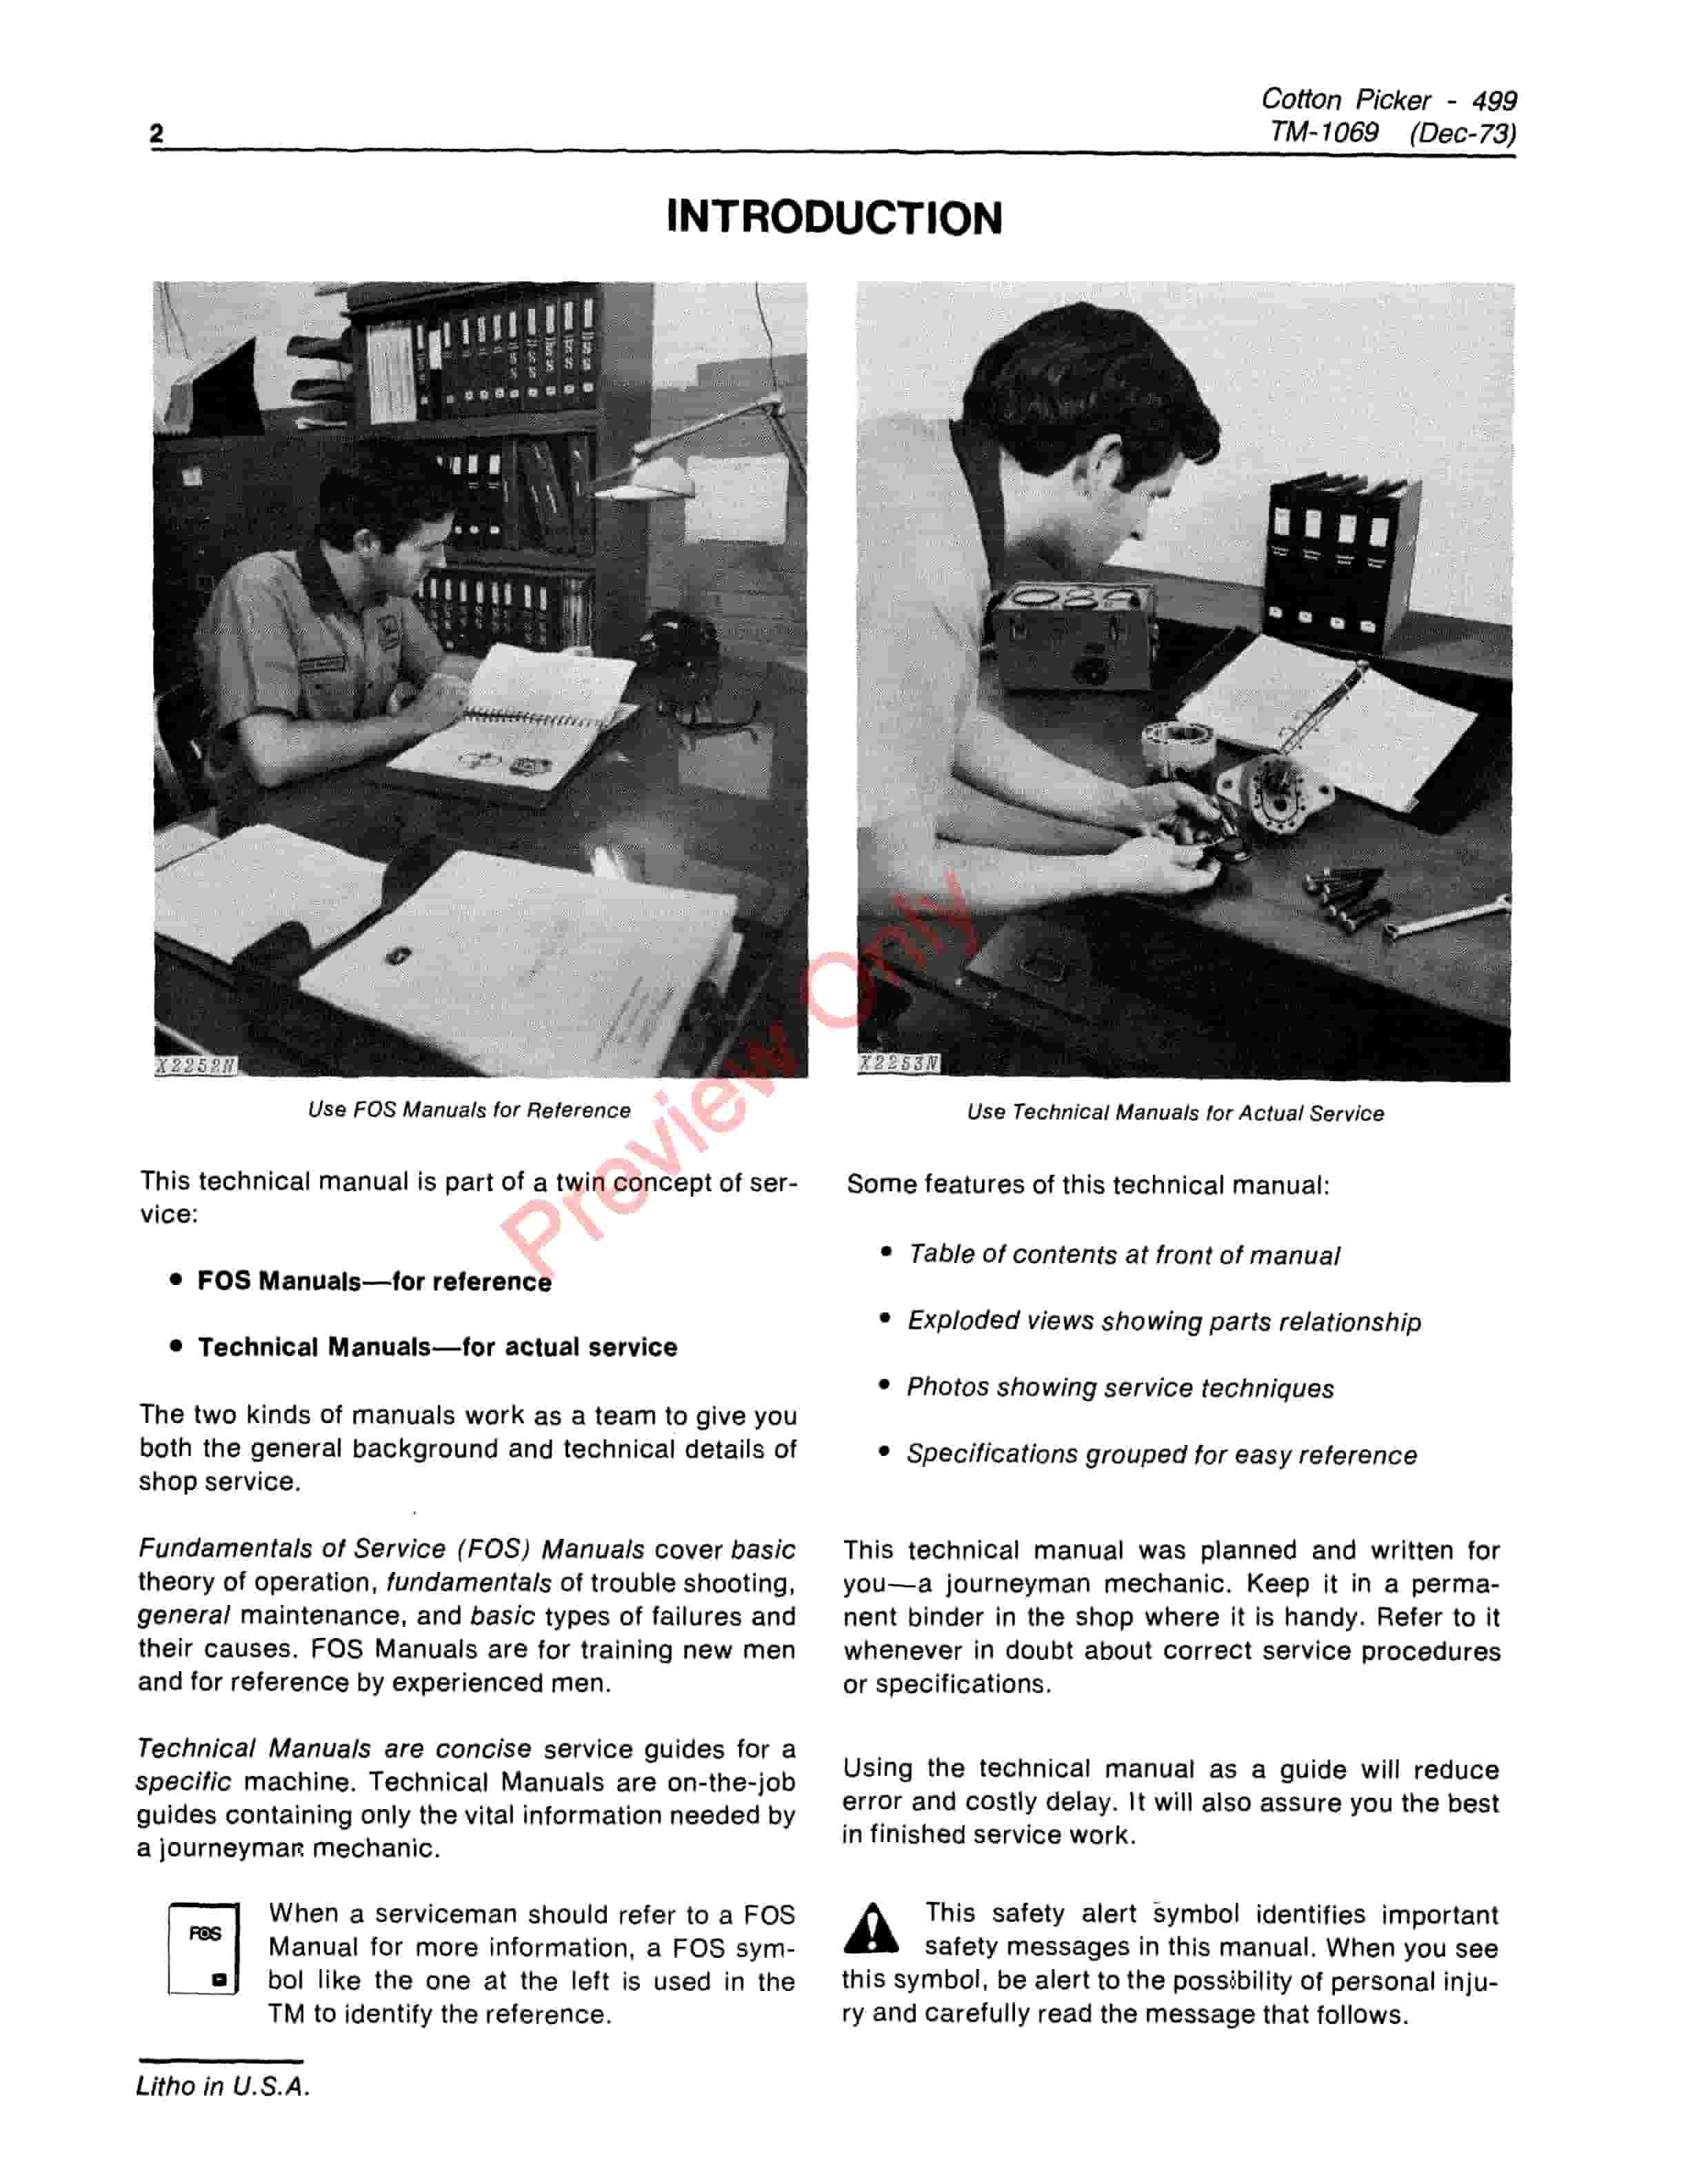 John Deere 499 Cotton Picker Technical Manual TM1069 01DEC73 4